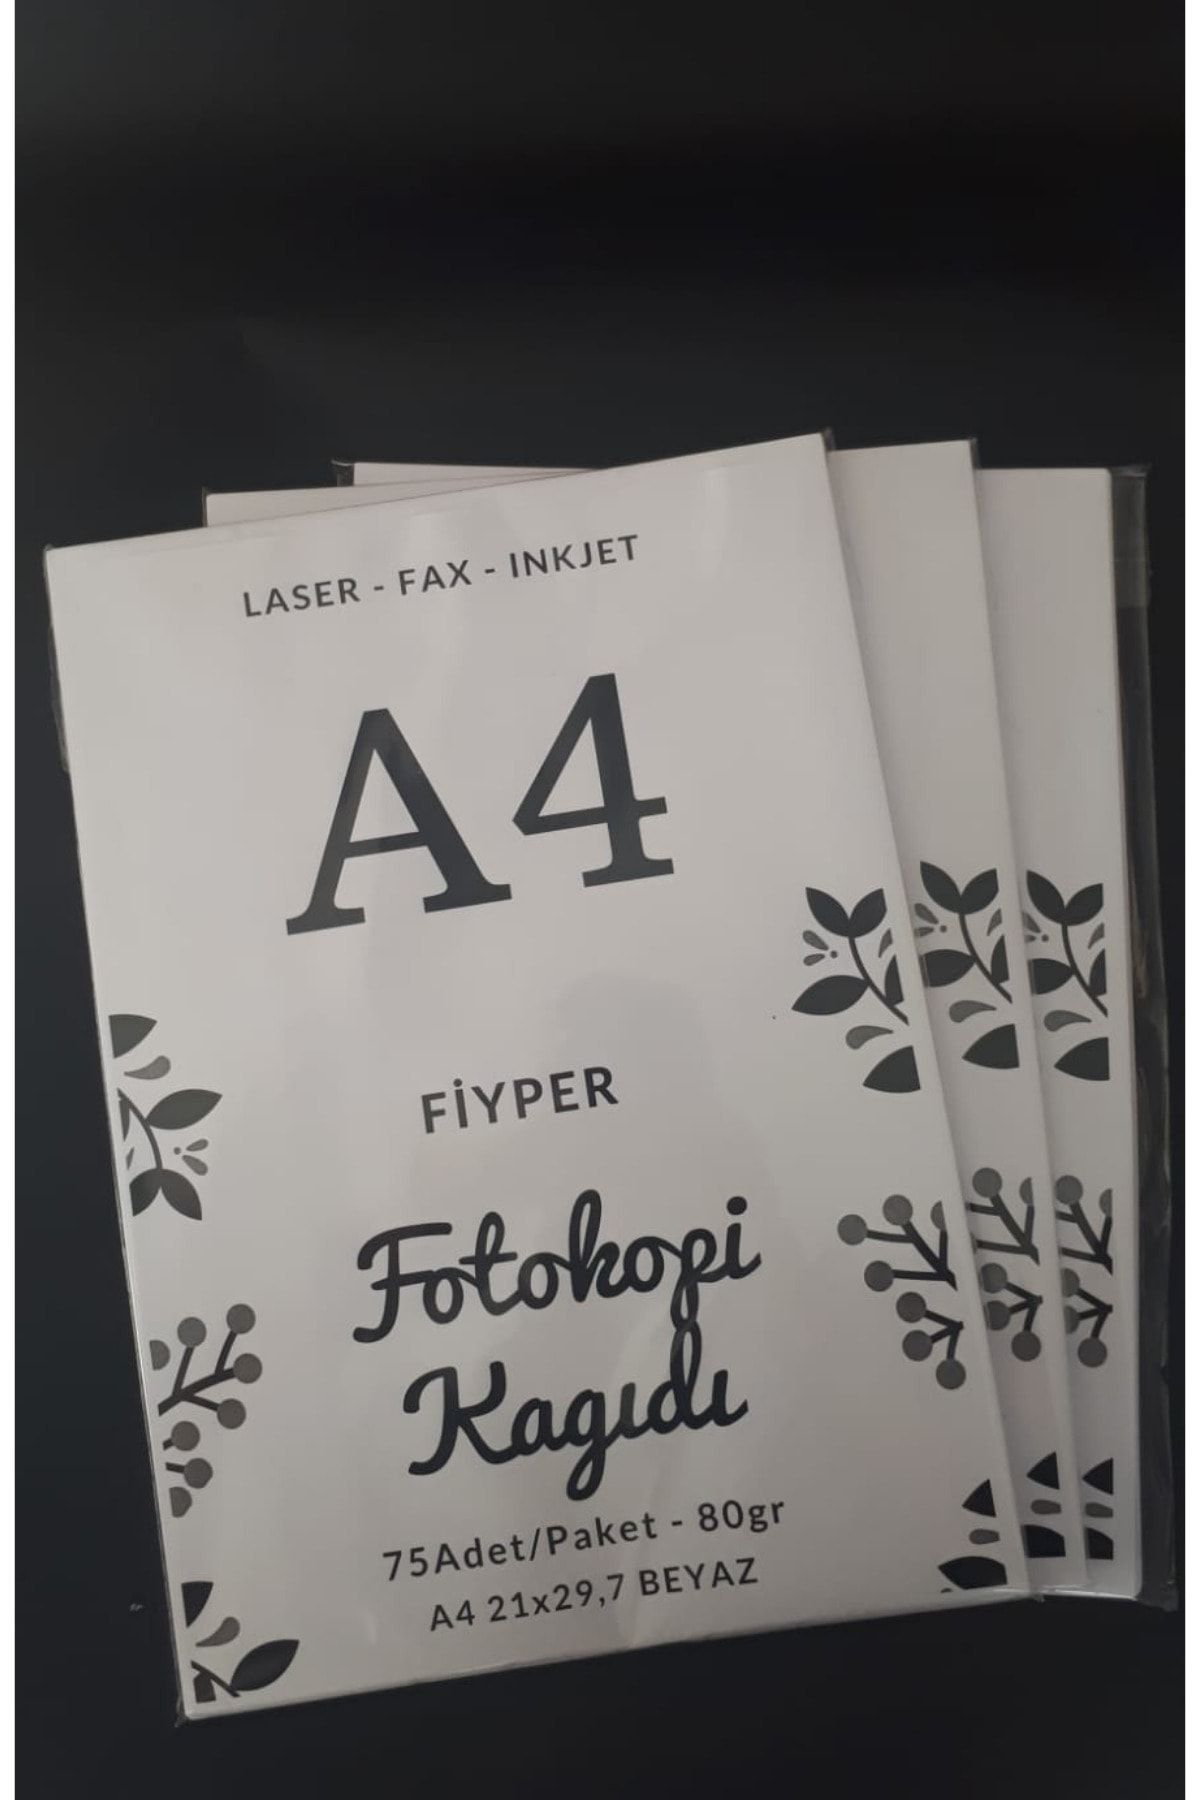 FİYPER A4 Fotokopi Kağıdı - 75'li Paket 80gr /m2 - Dosya Kağıdı